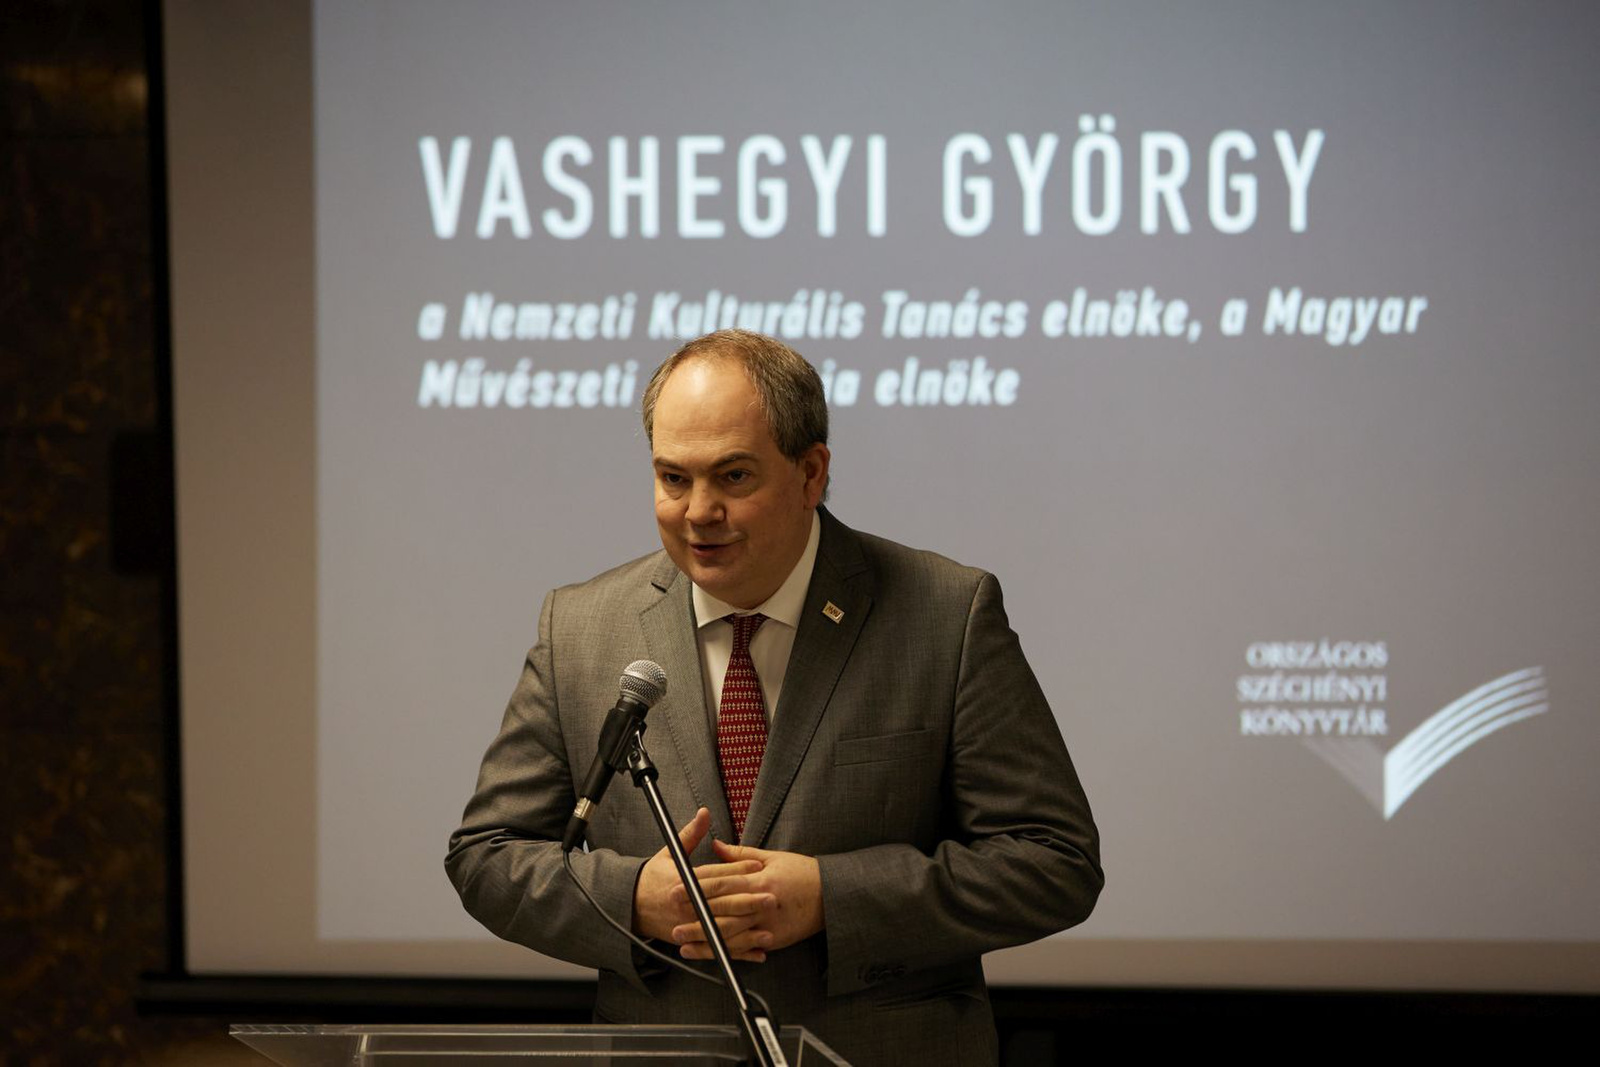 Vashegyi György